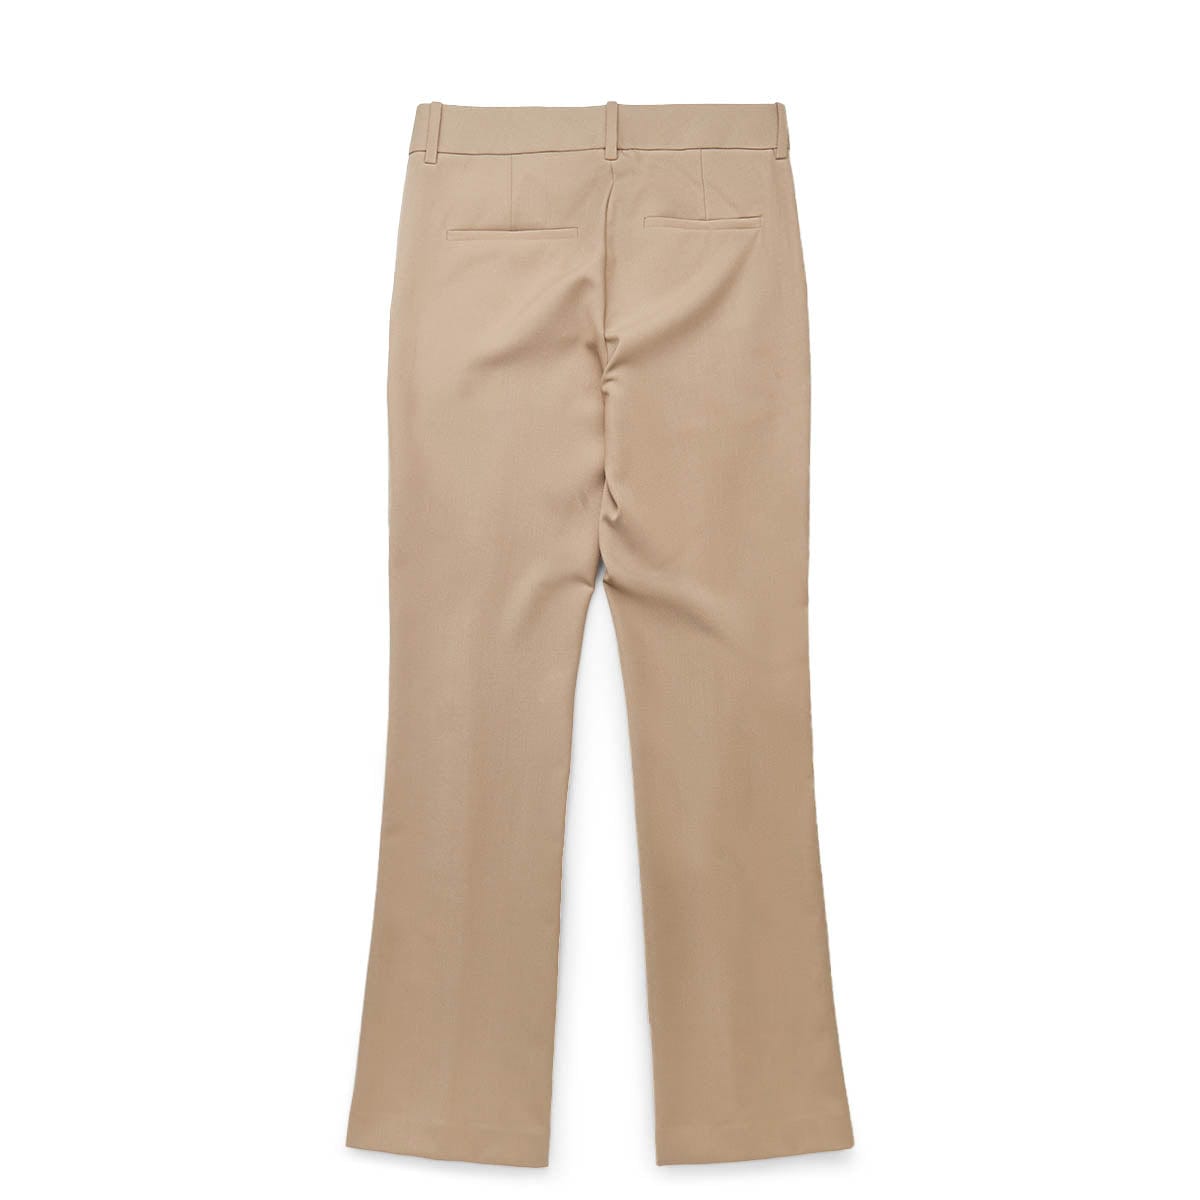 Pintucked Flowy Wide Leg Pants for Women in Taupe | MAP2181-TAN – Glik's